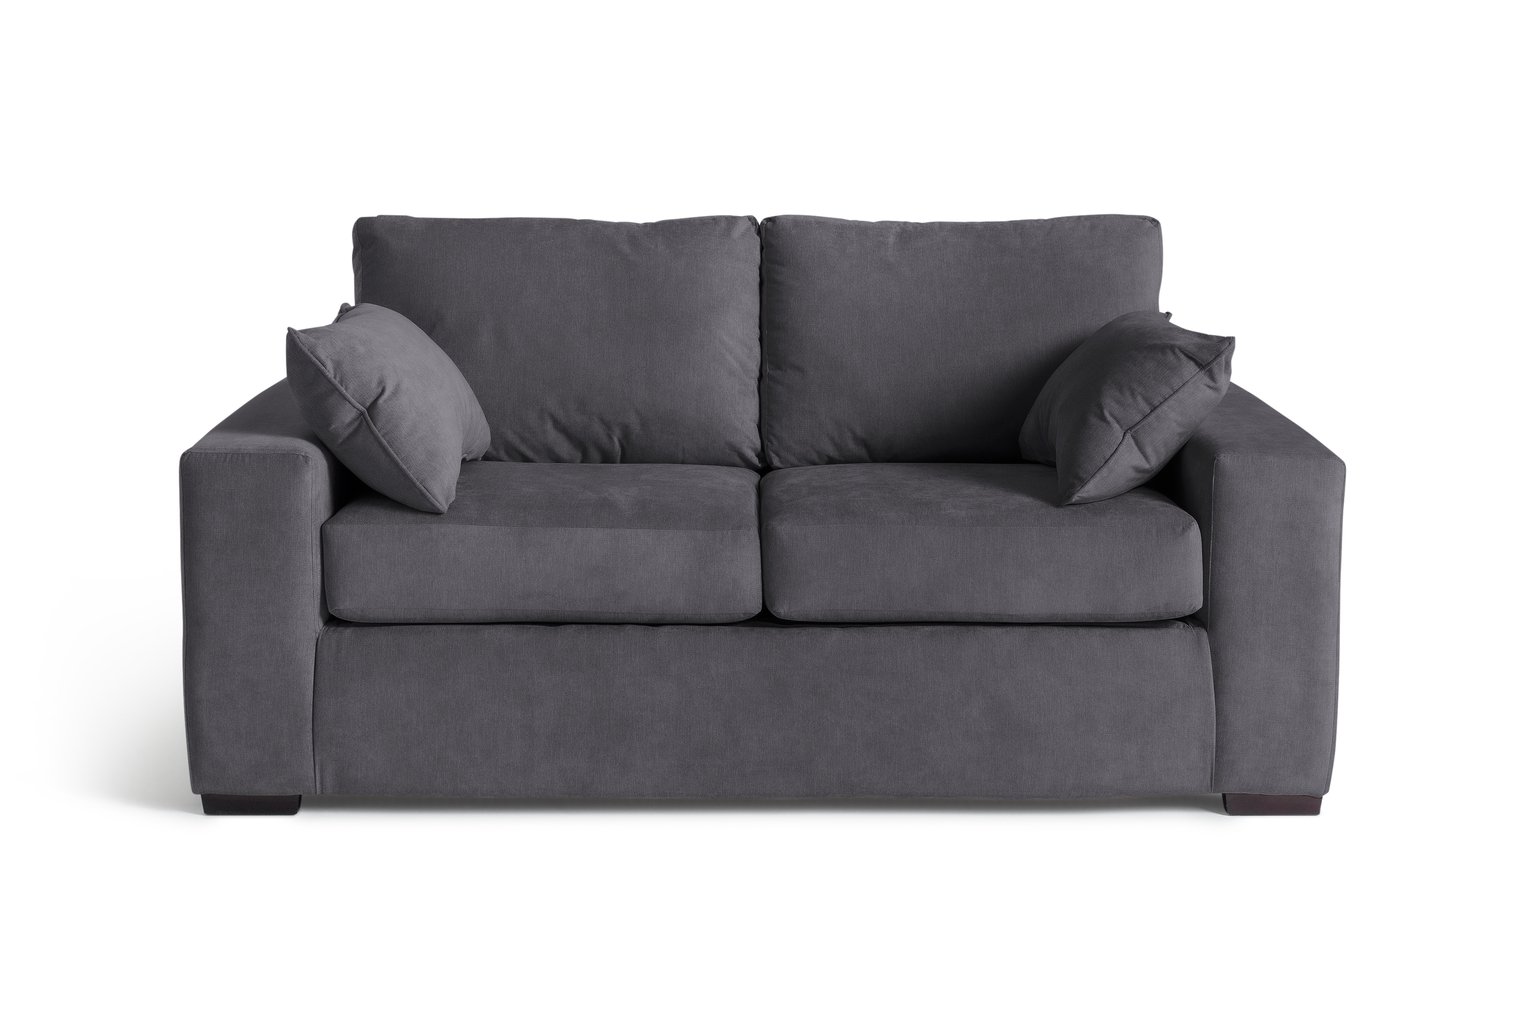 Habitat Eton 2 Seater Fabric Sofa Bed - Charcoal